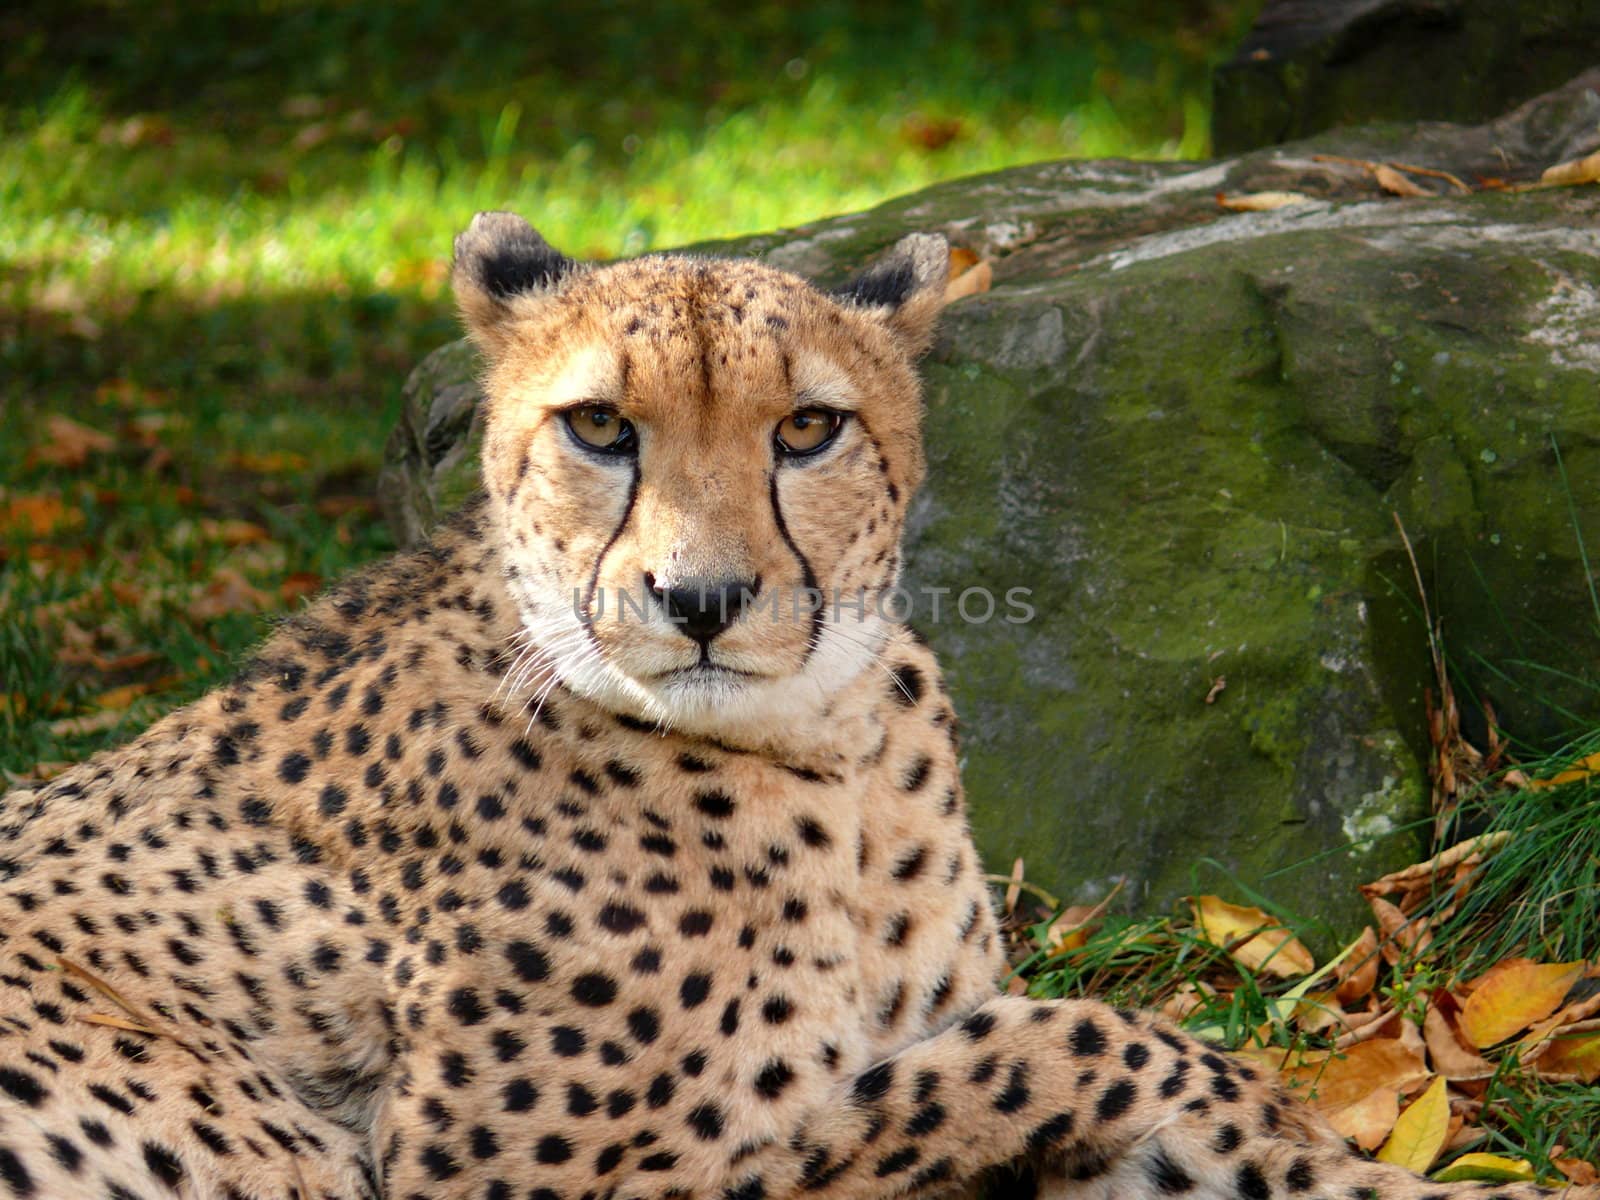 portrait of the Cheetah by Stoyanov